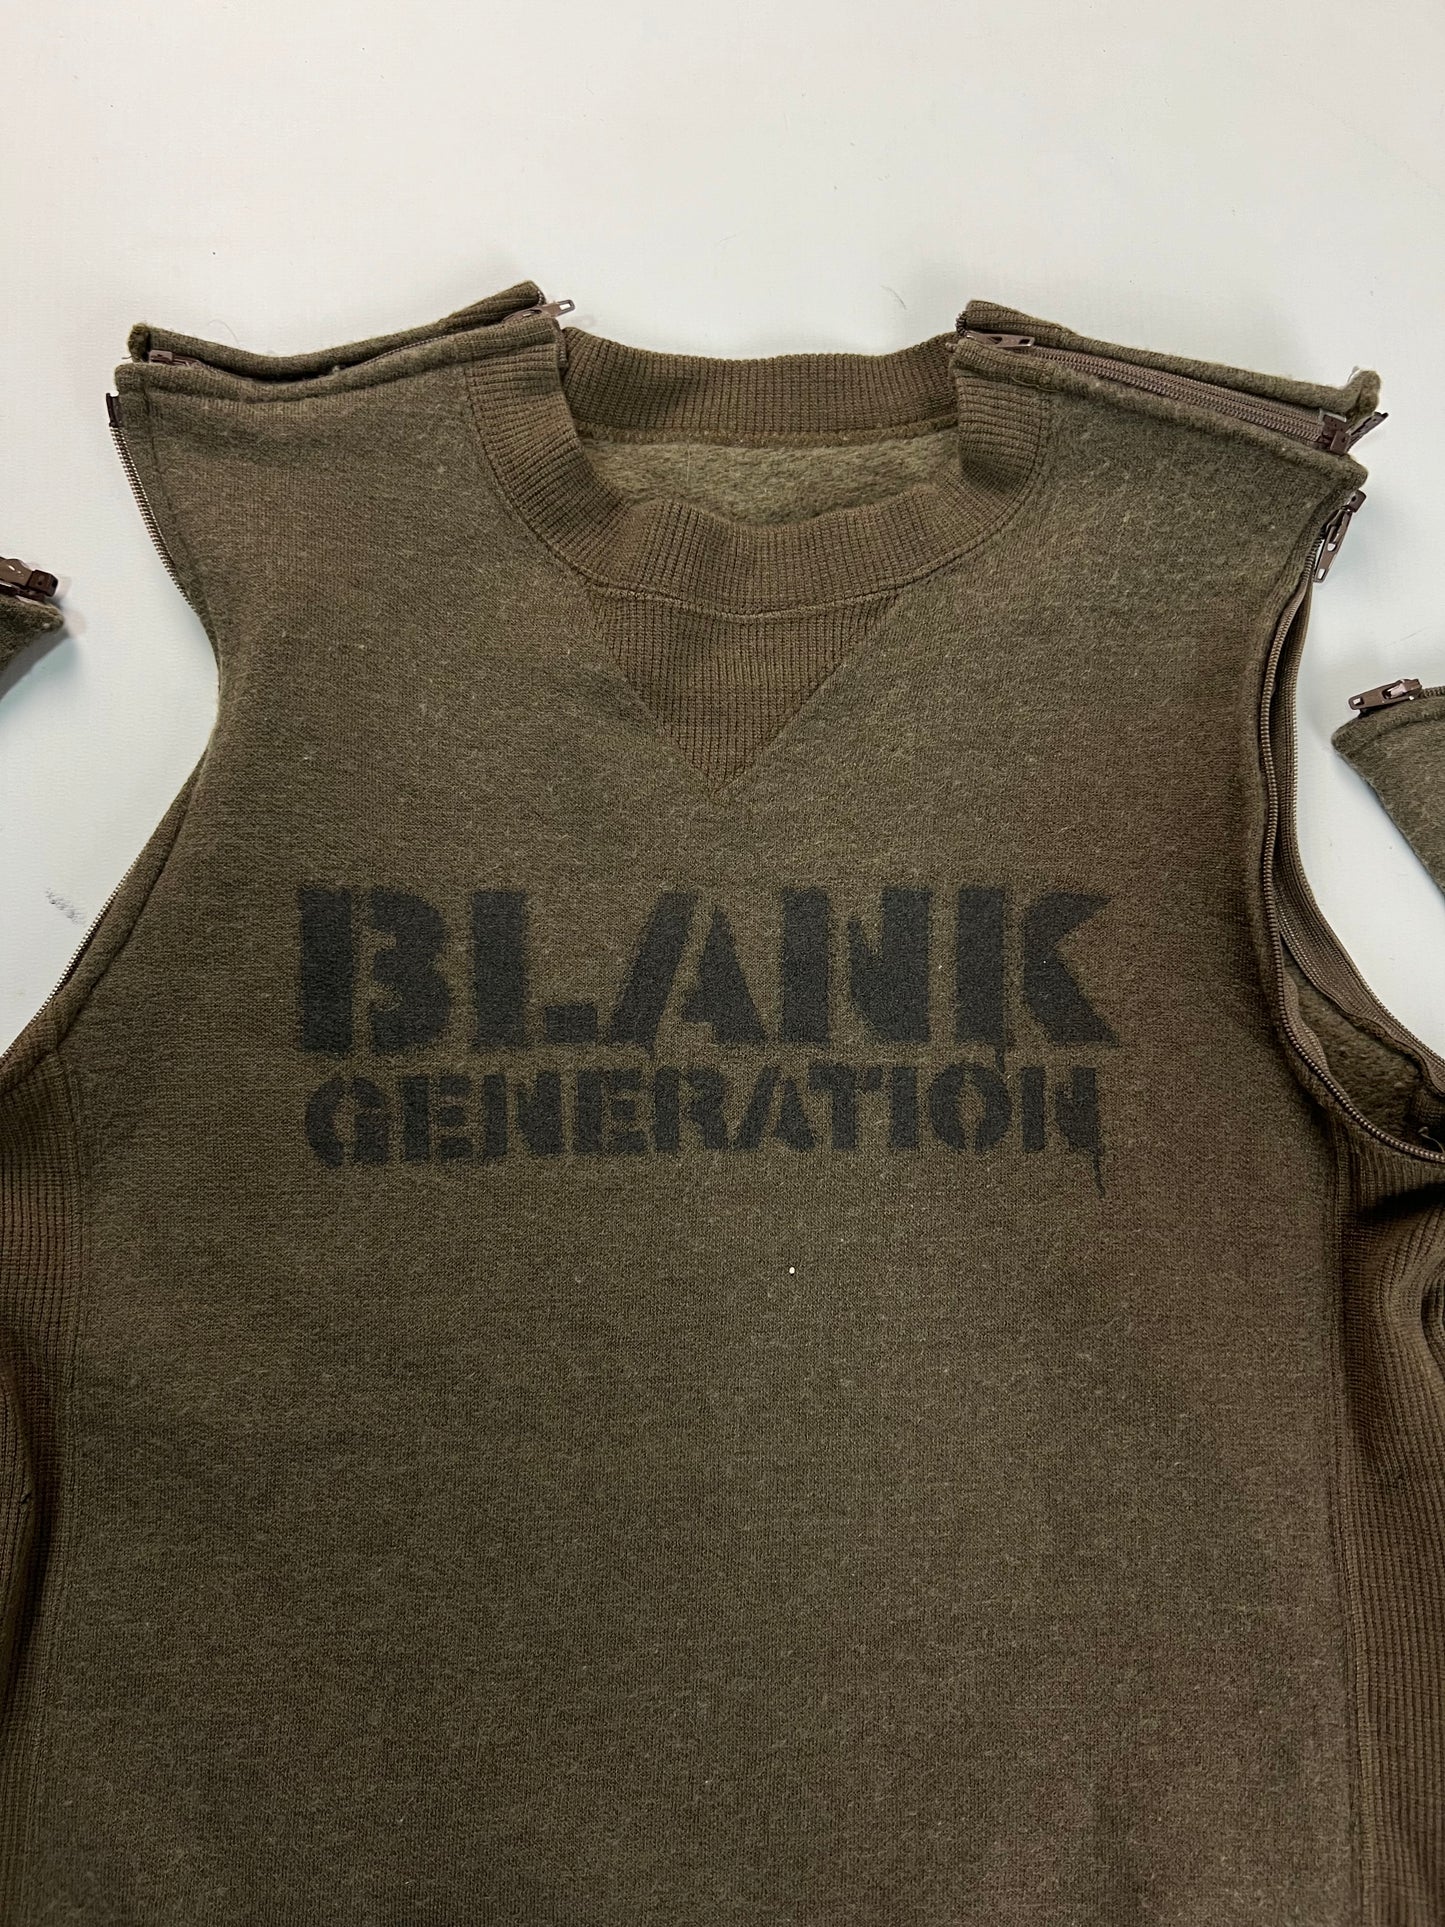 Undercover Blank Generation Sweater SZ:2